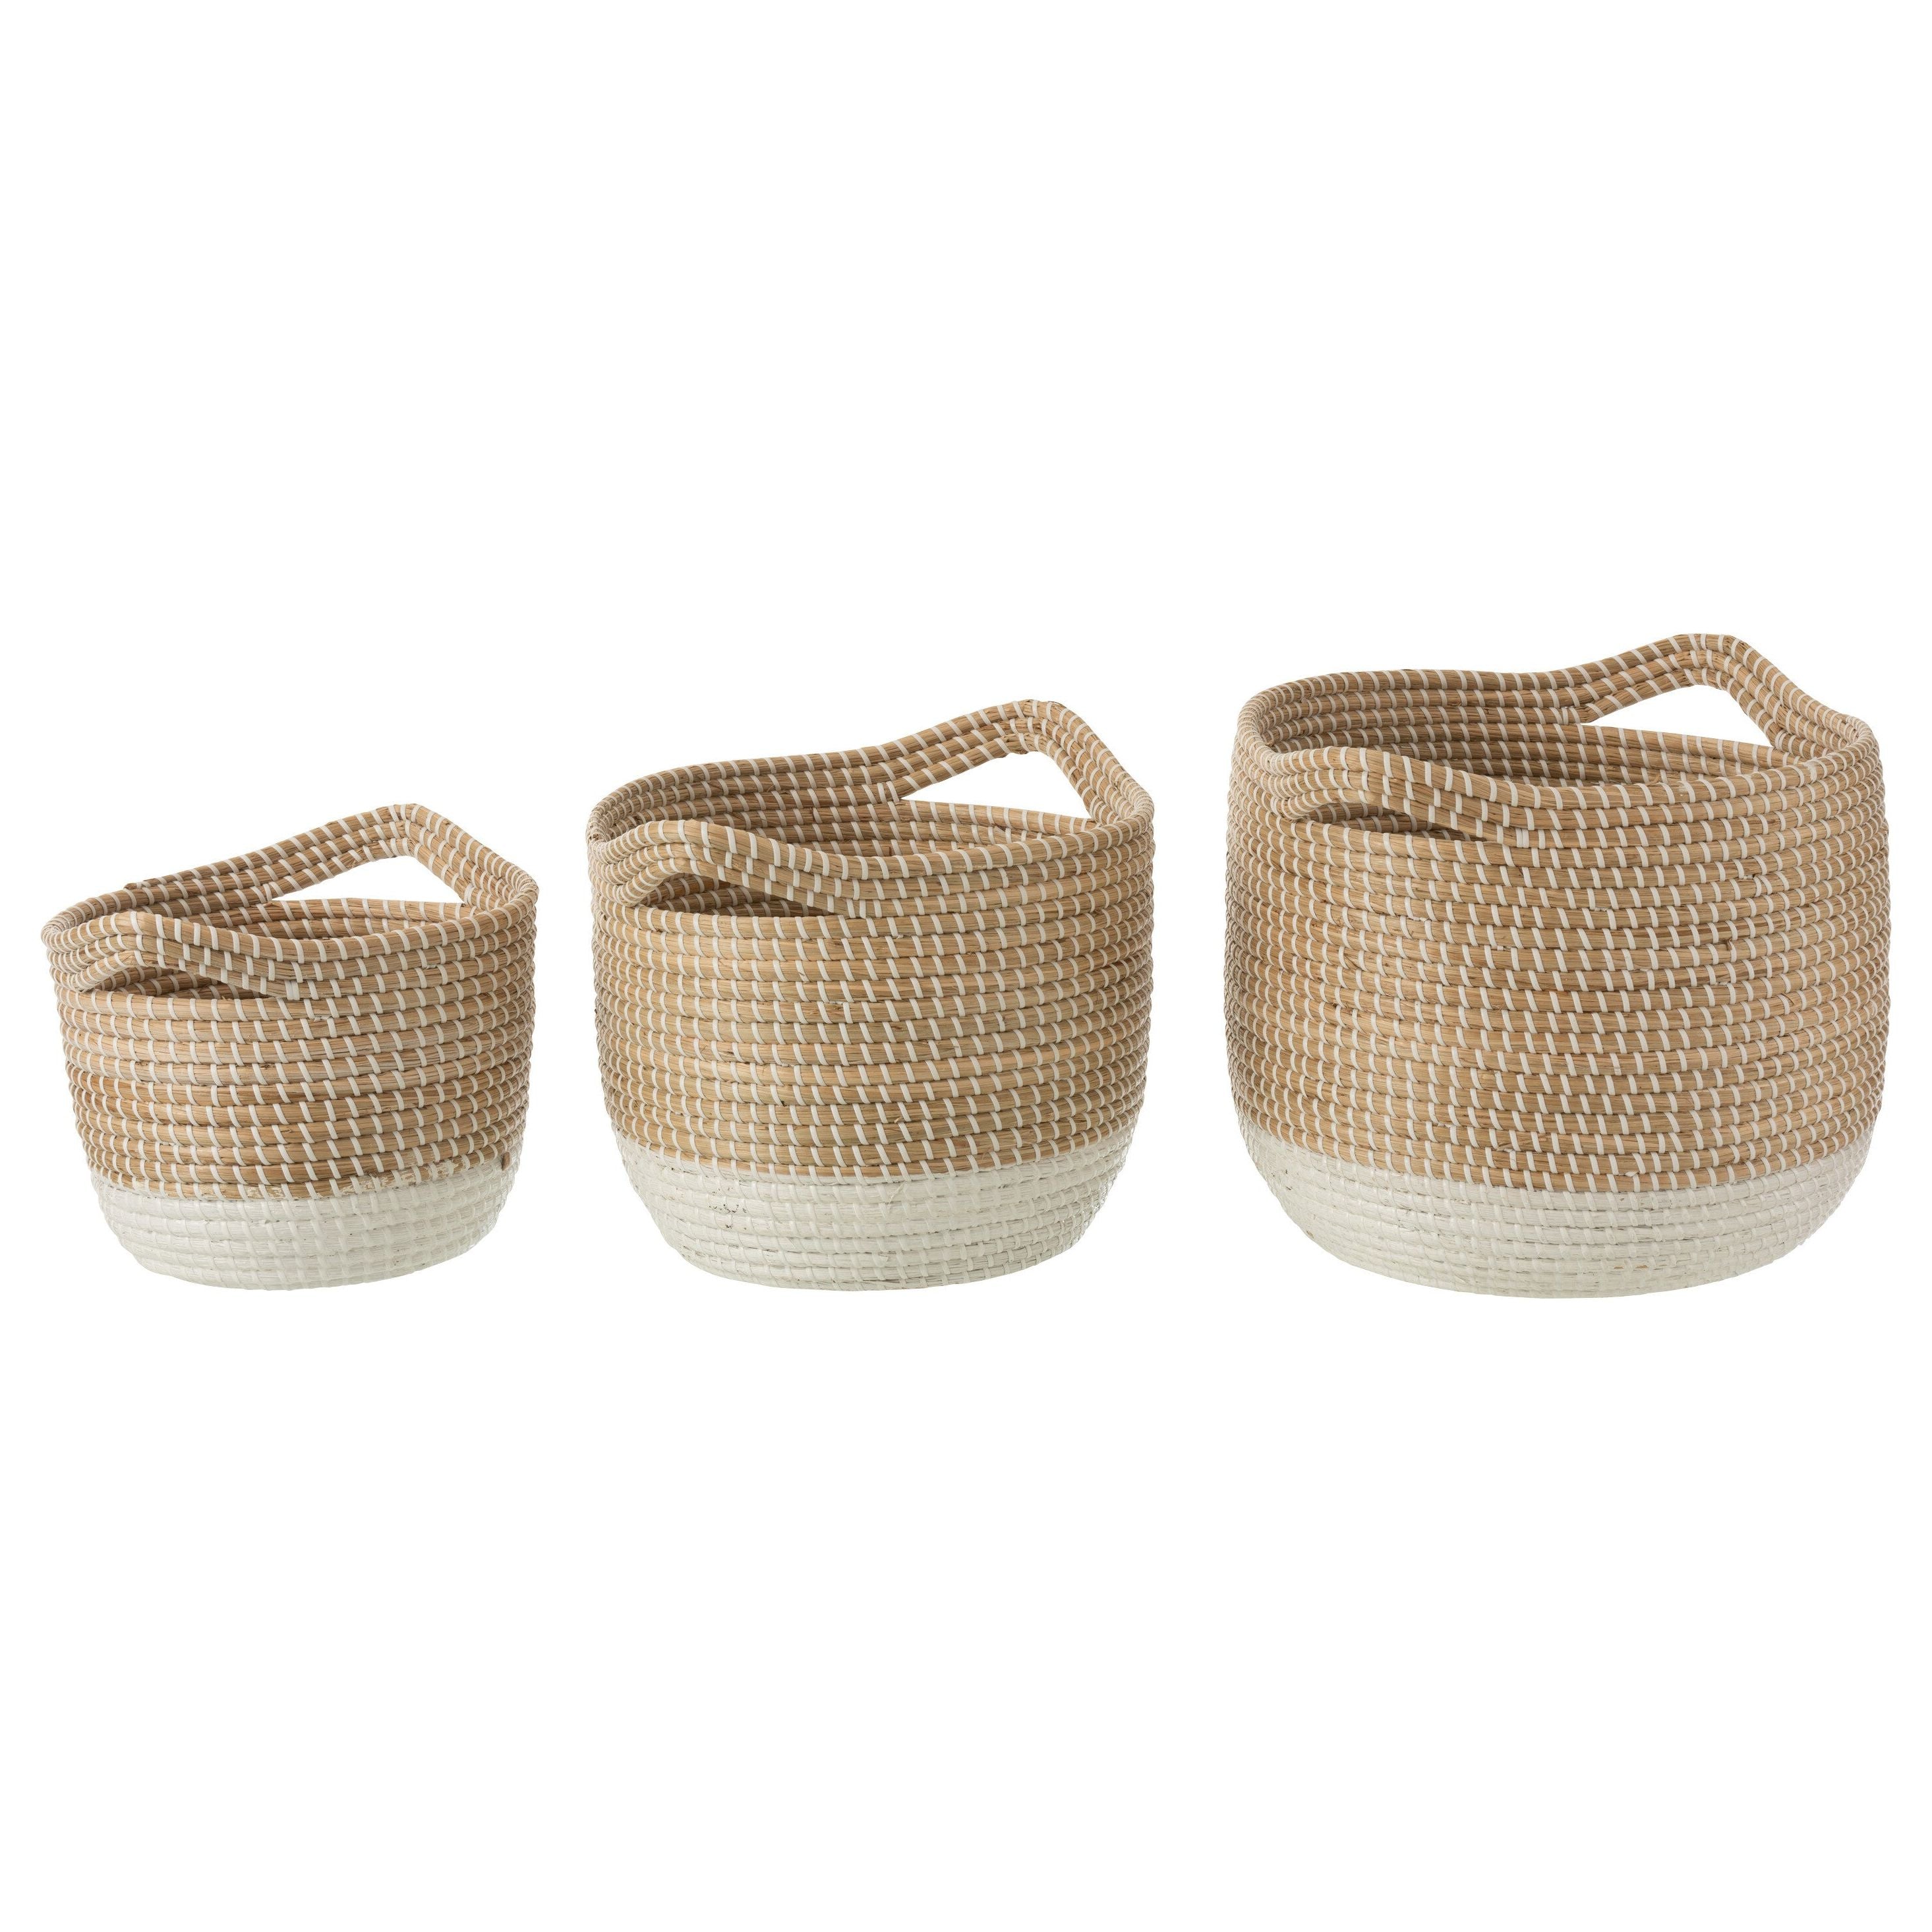 Baskets Round Seagrass Natural/white